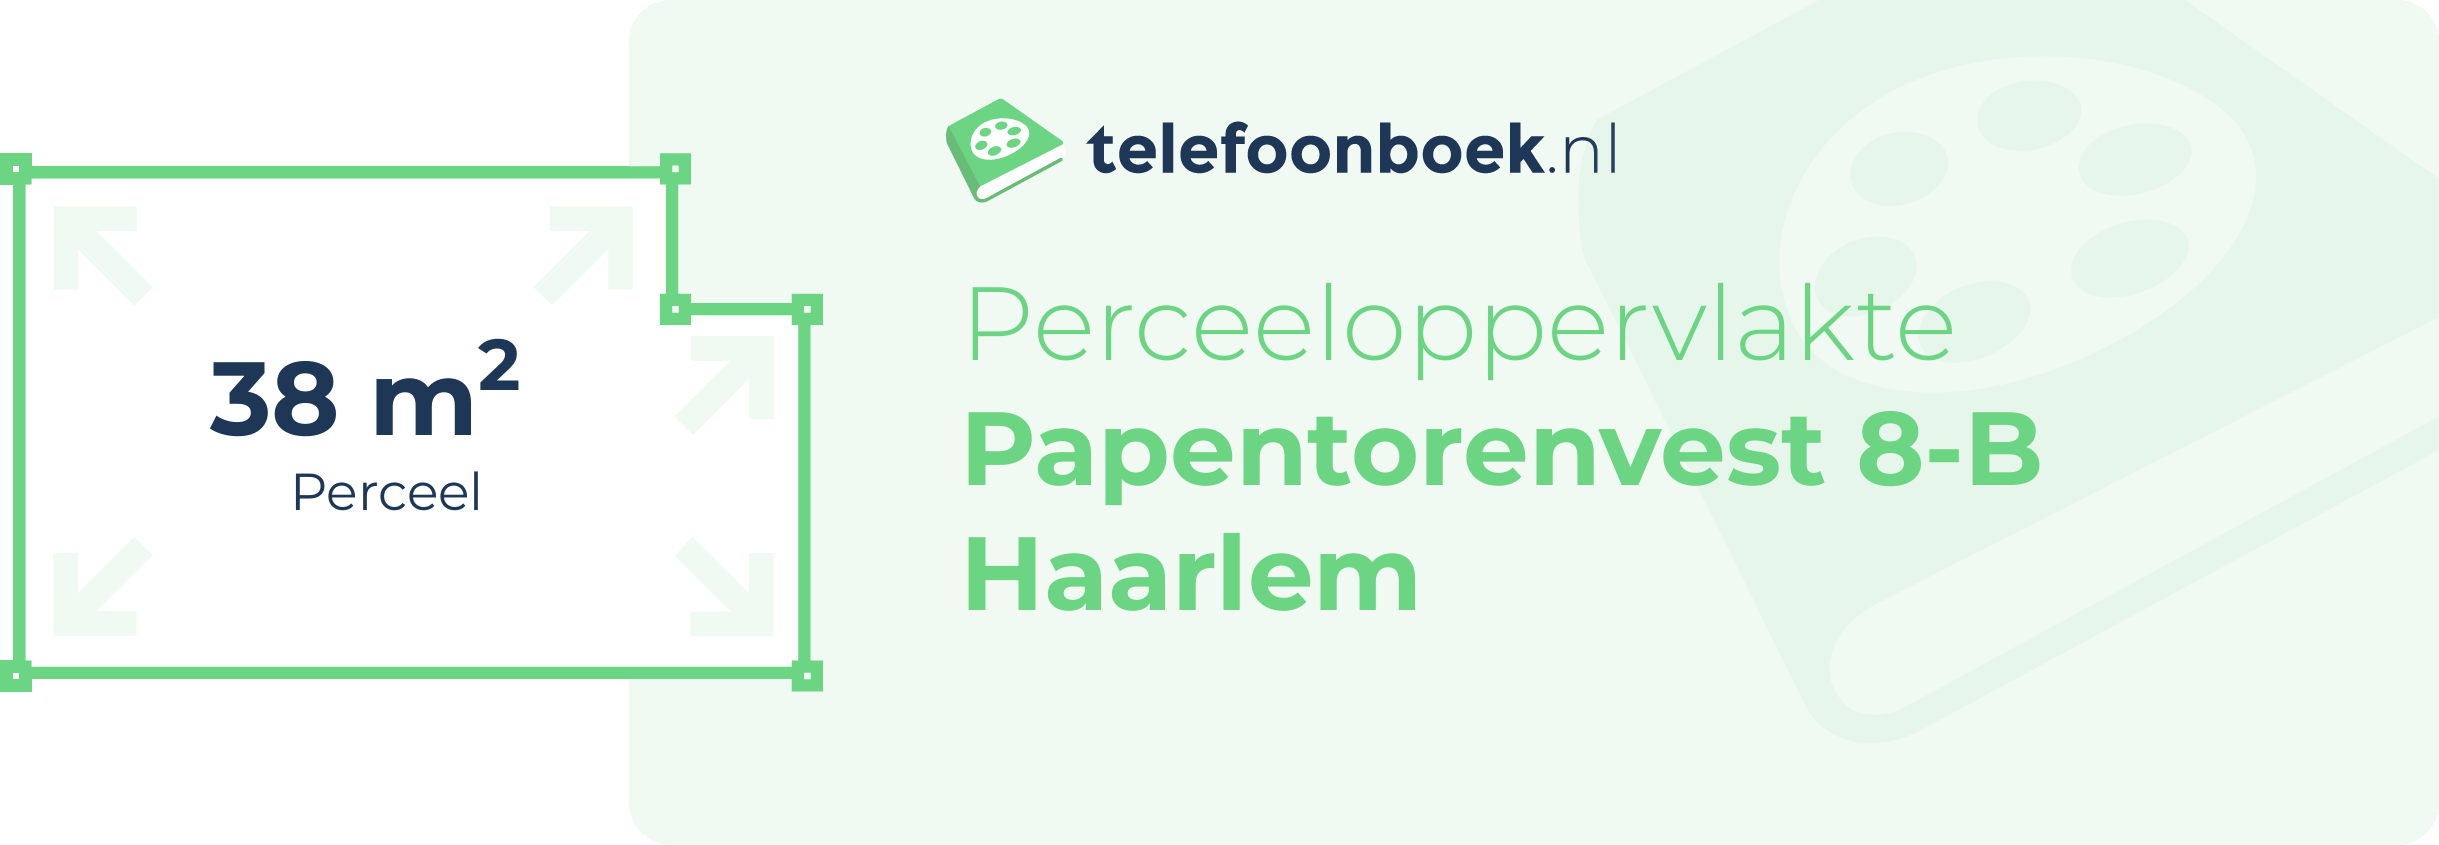 Perceeloppervlakte Papentorenvest 8-B Haarlem